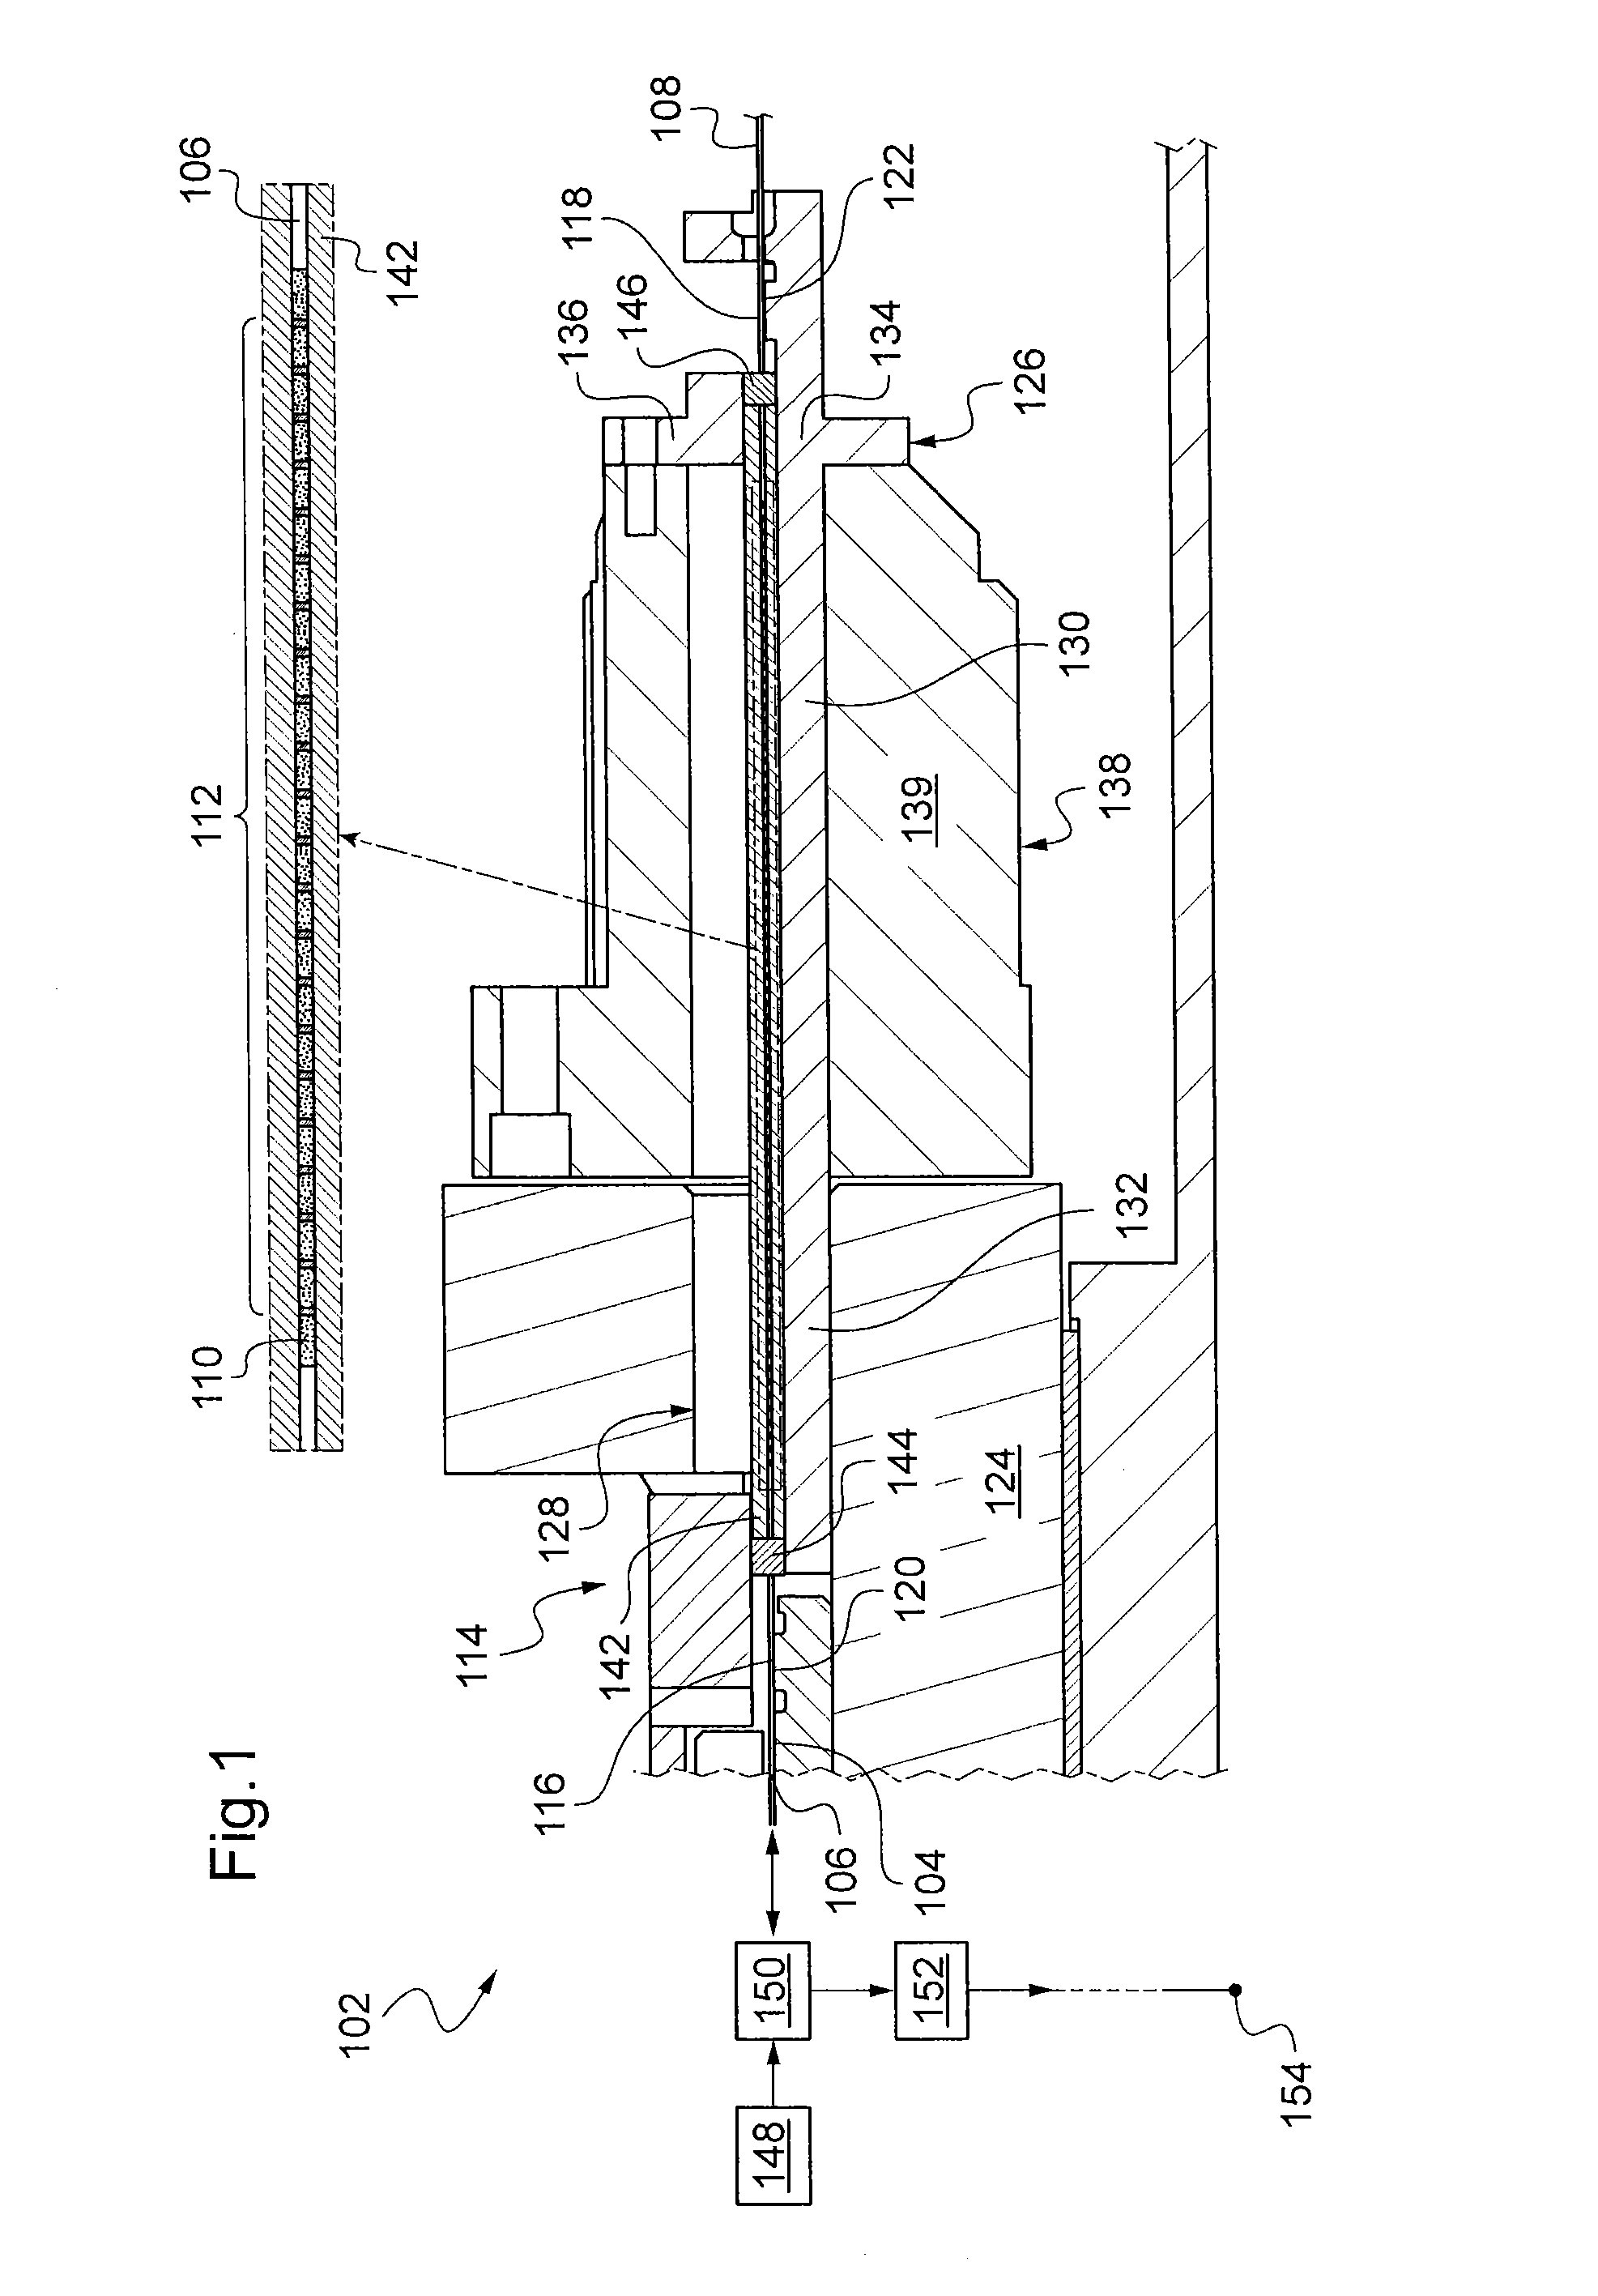 Method for manufacturing an optical fibre laser